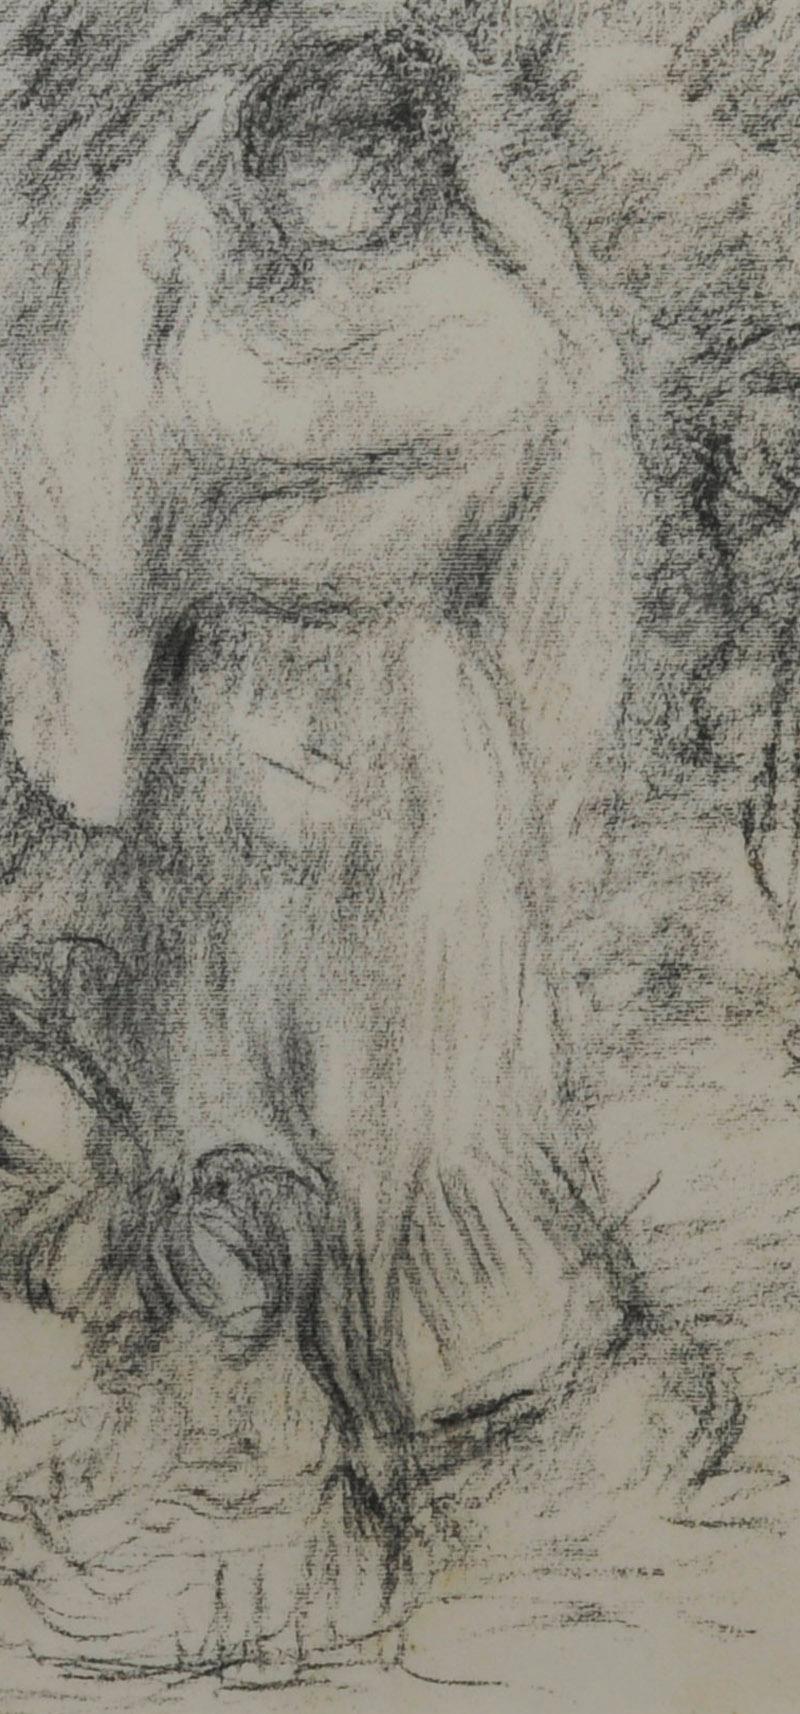 Les Laveuses, 2e Pensee (The Washerwoman) - Impressionist Print by Pierre-Auguste Renoir